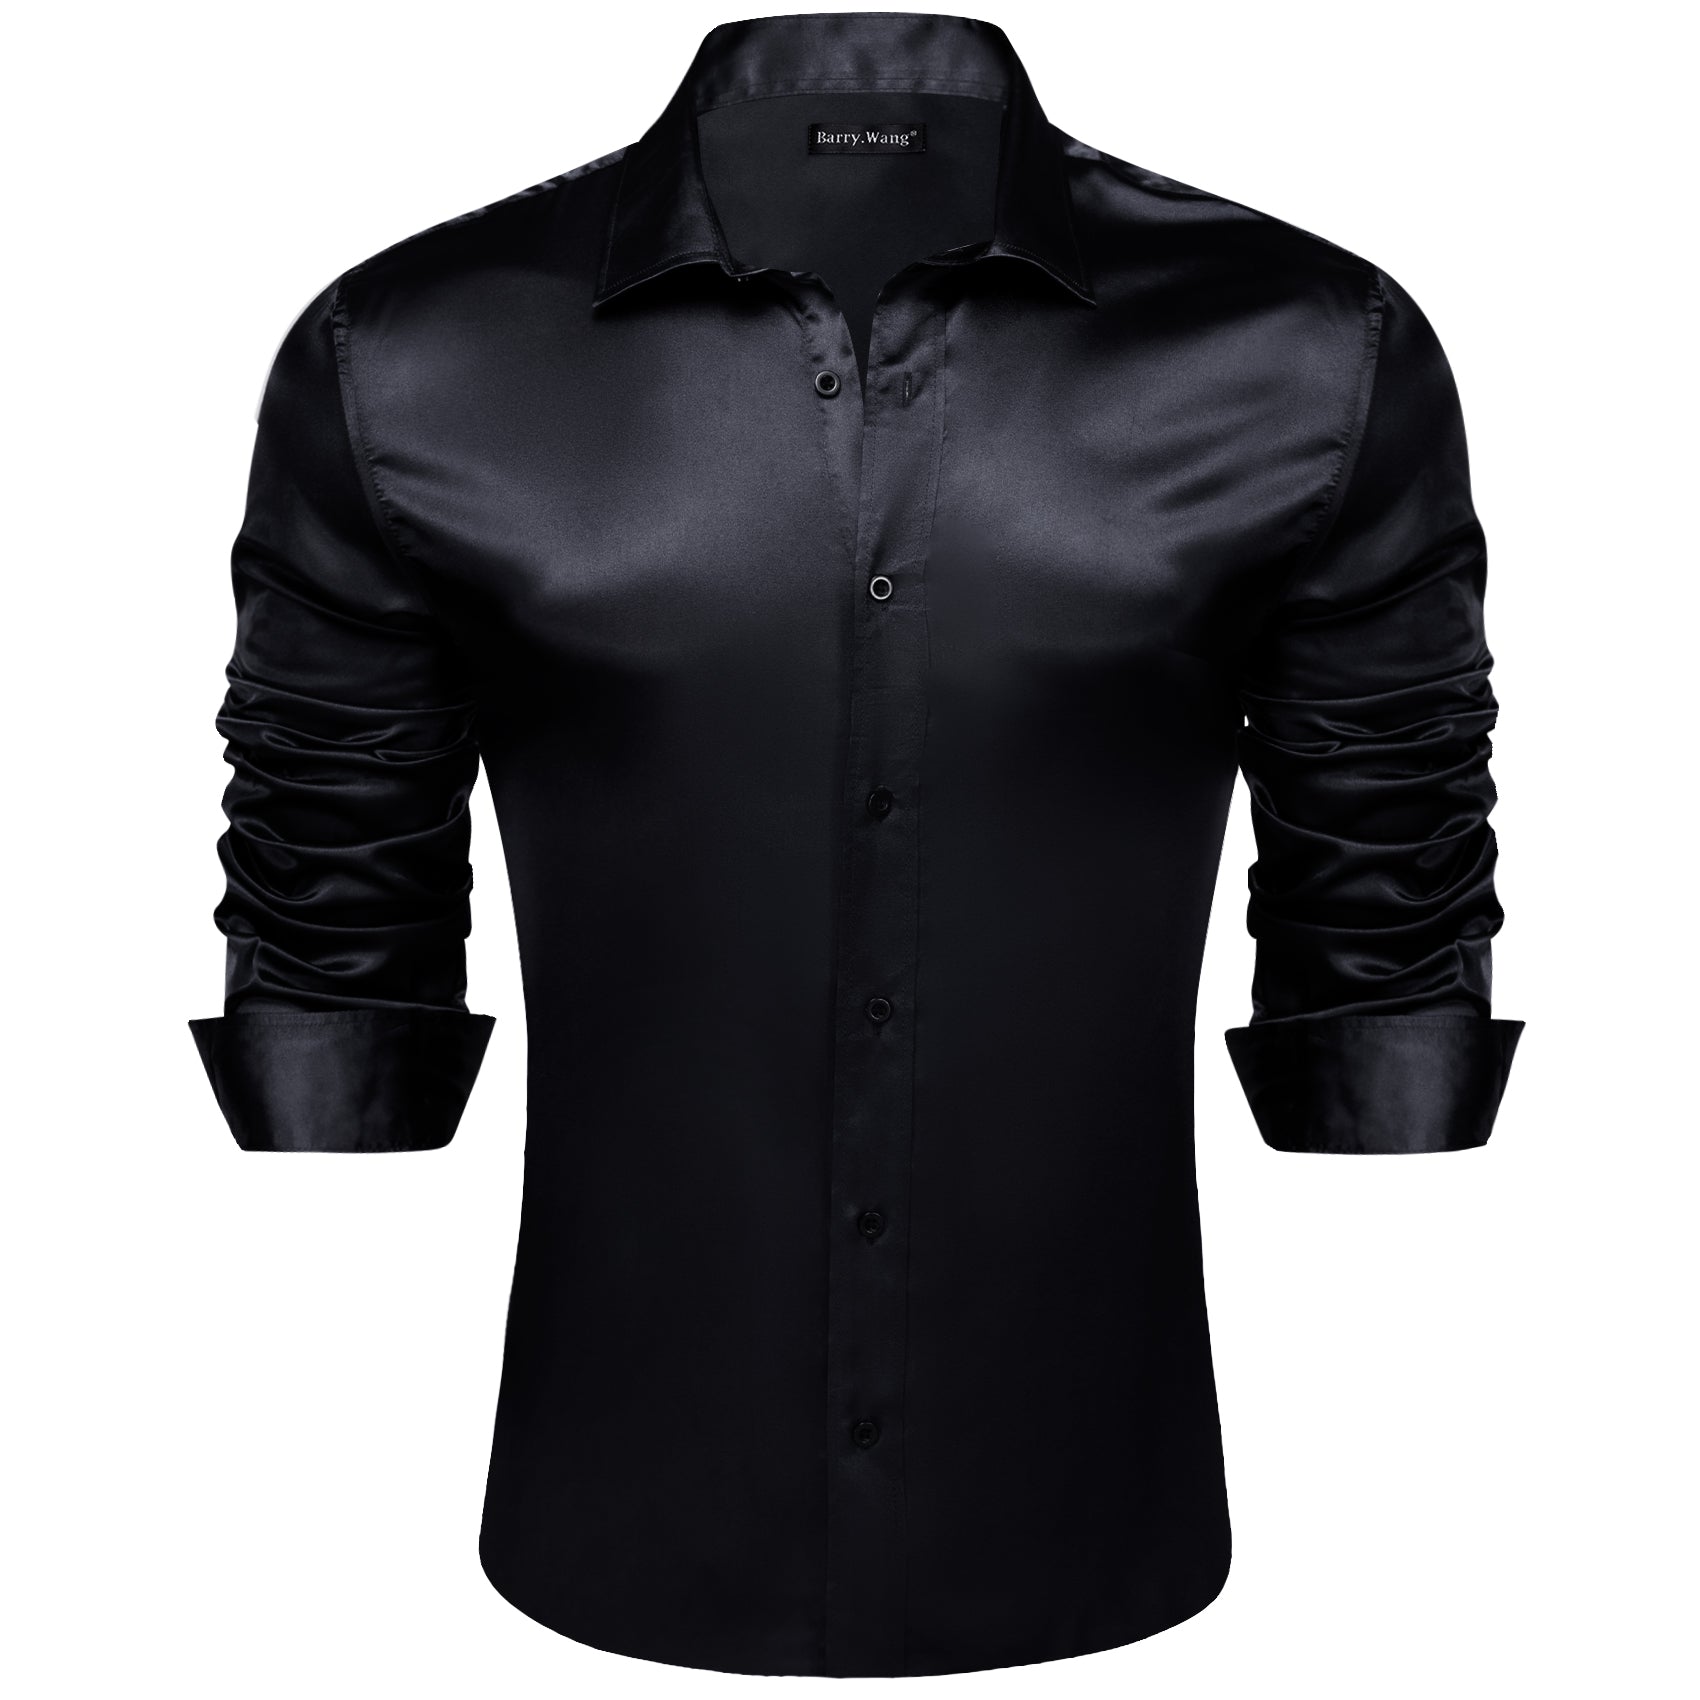 Barry.wang Black Solid Silk Shirt